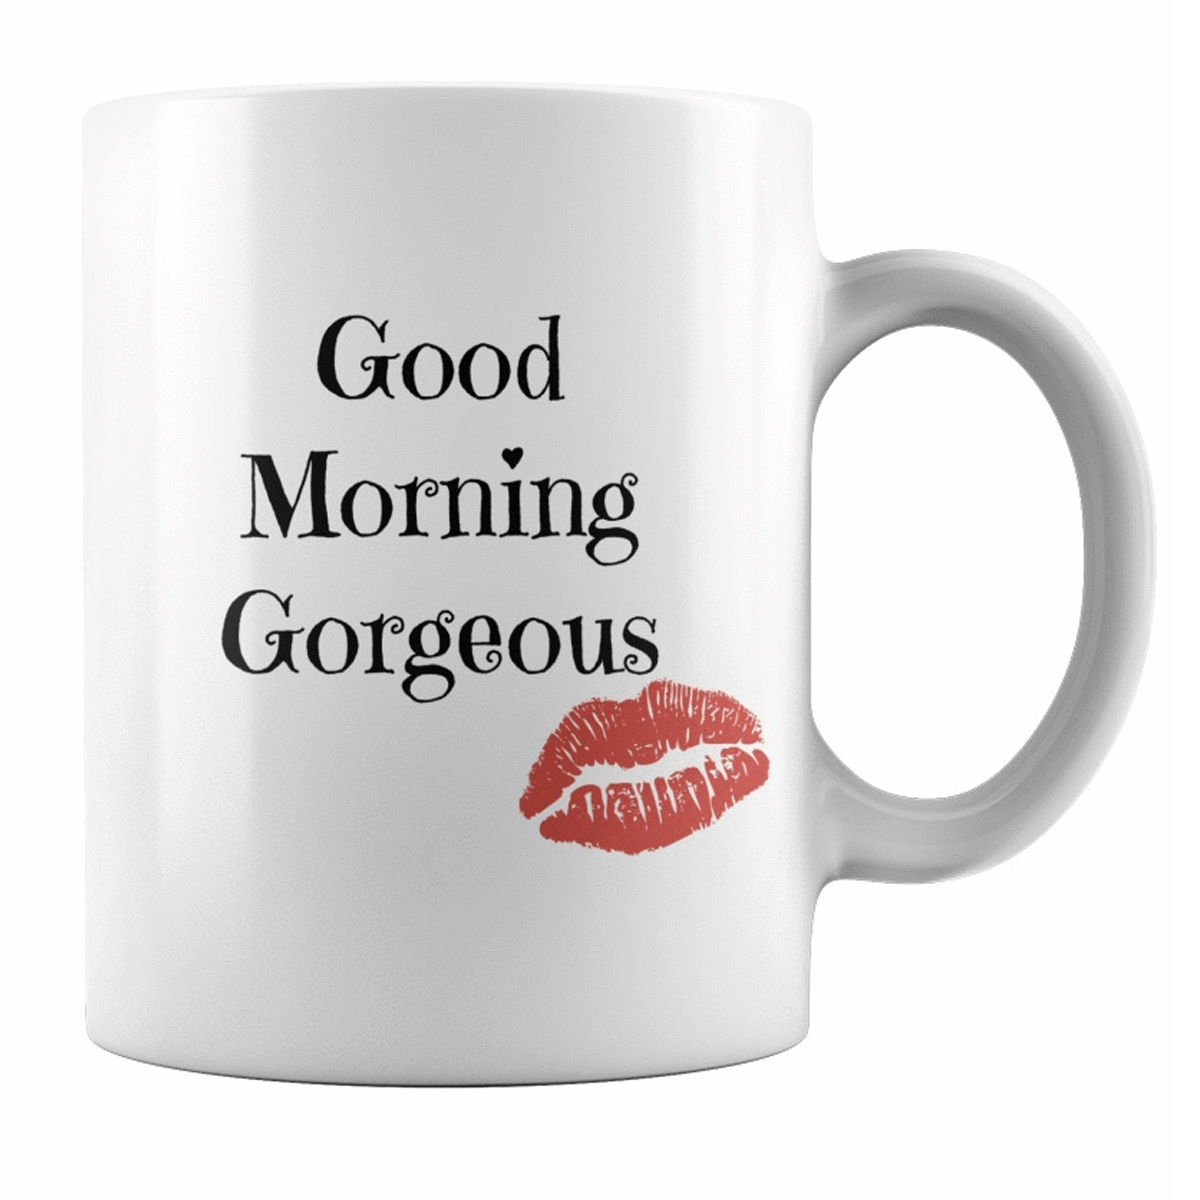 Good Morning Gorgeous - 11 Oz Coffee Mug